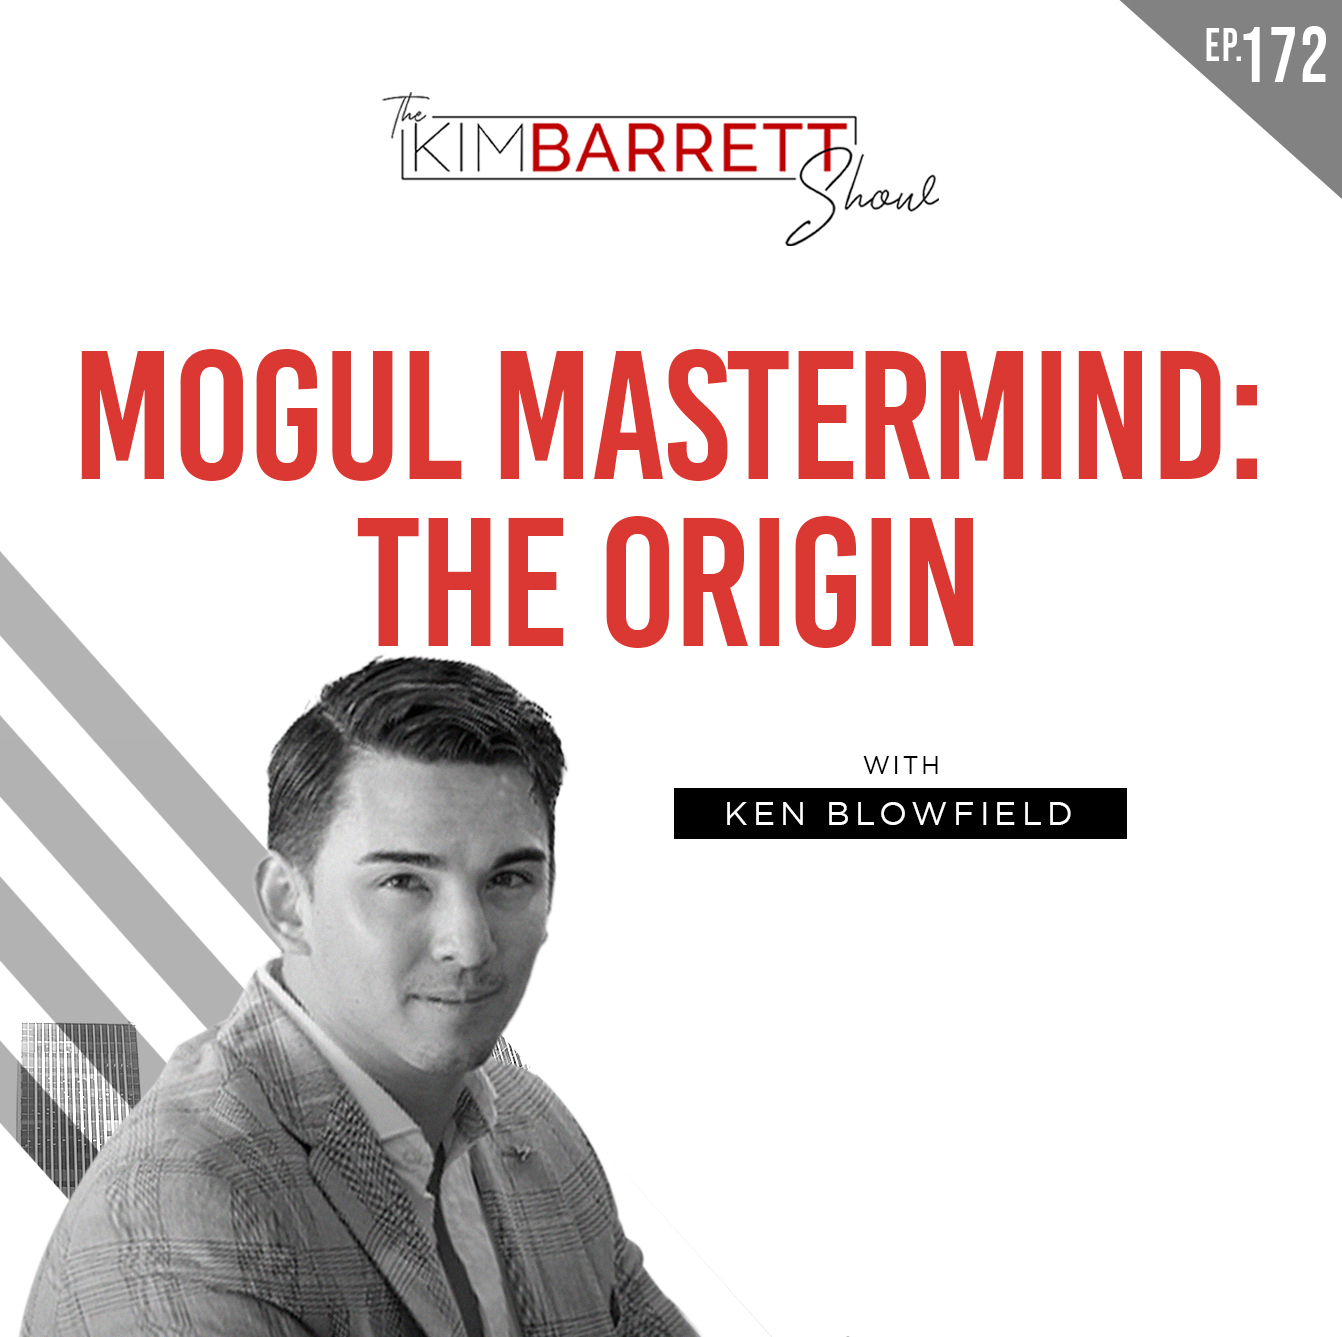 Mogul Mastermind: The Origin